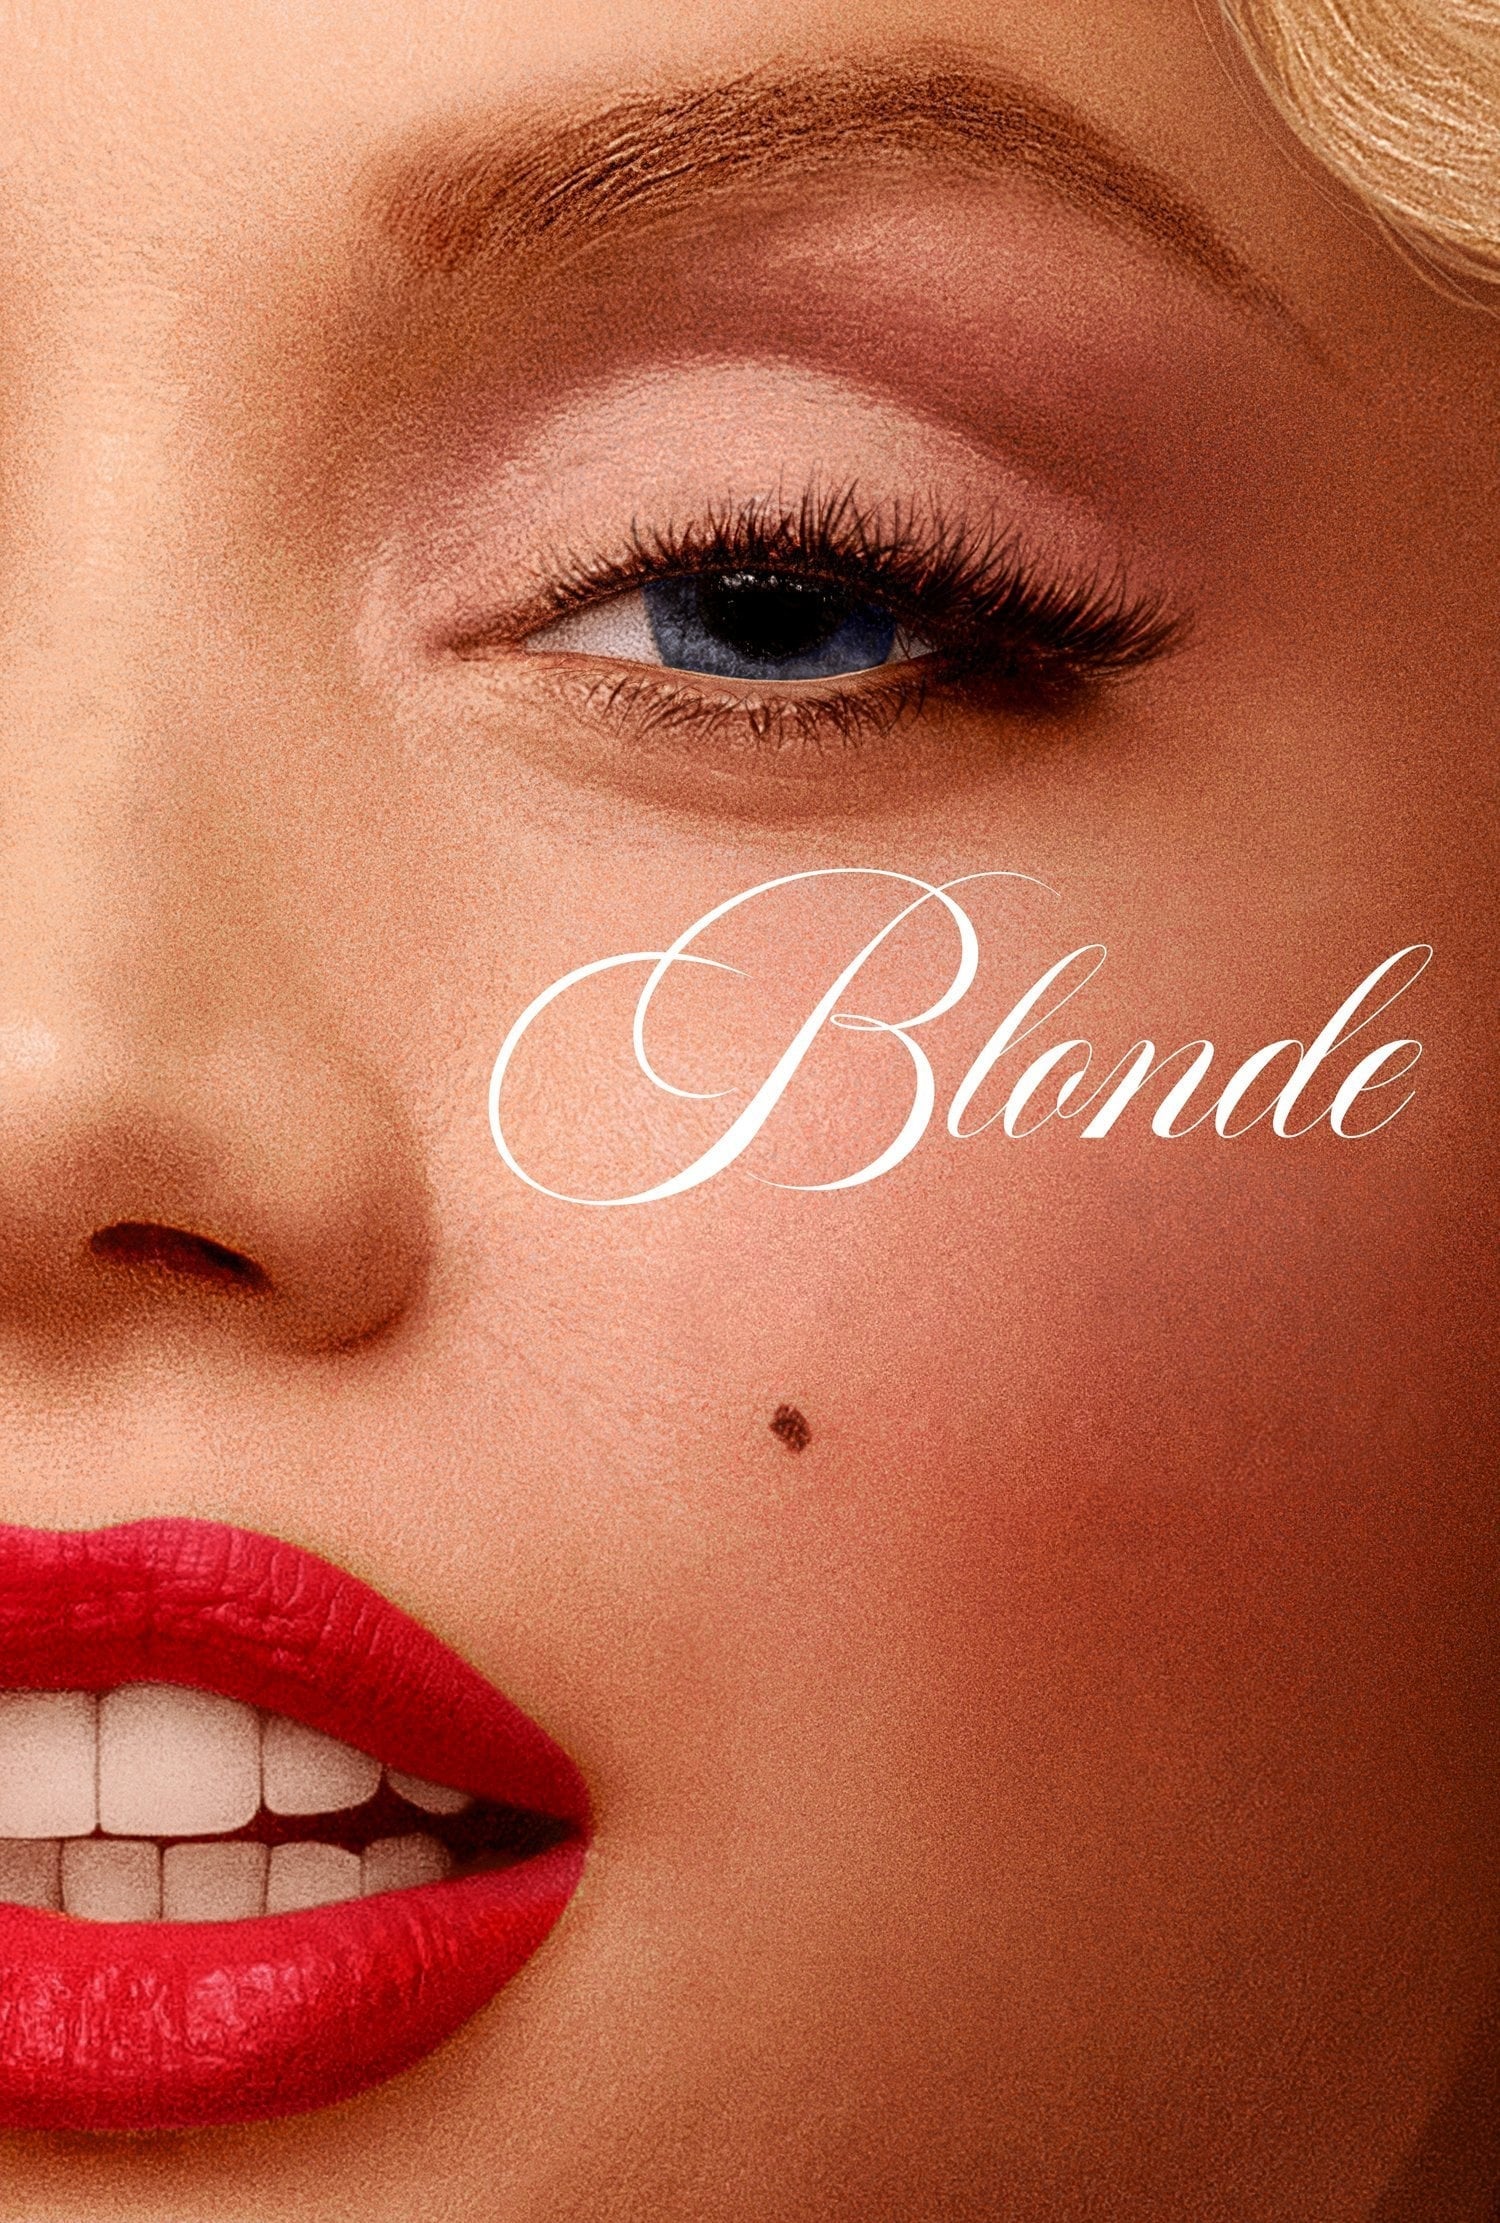 Blonde: Câu chuyện khác về Marilyn (Blonde) [2022]